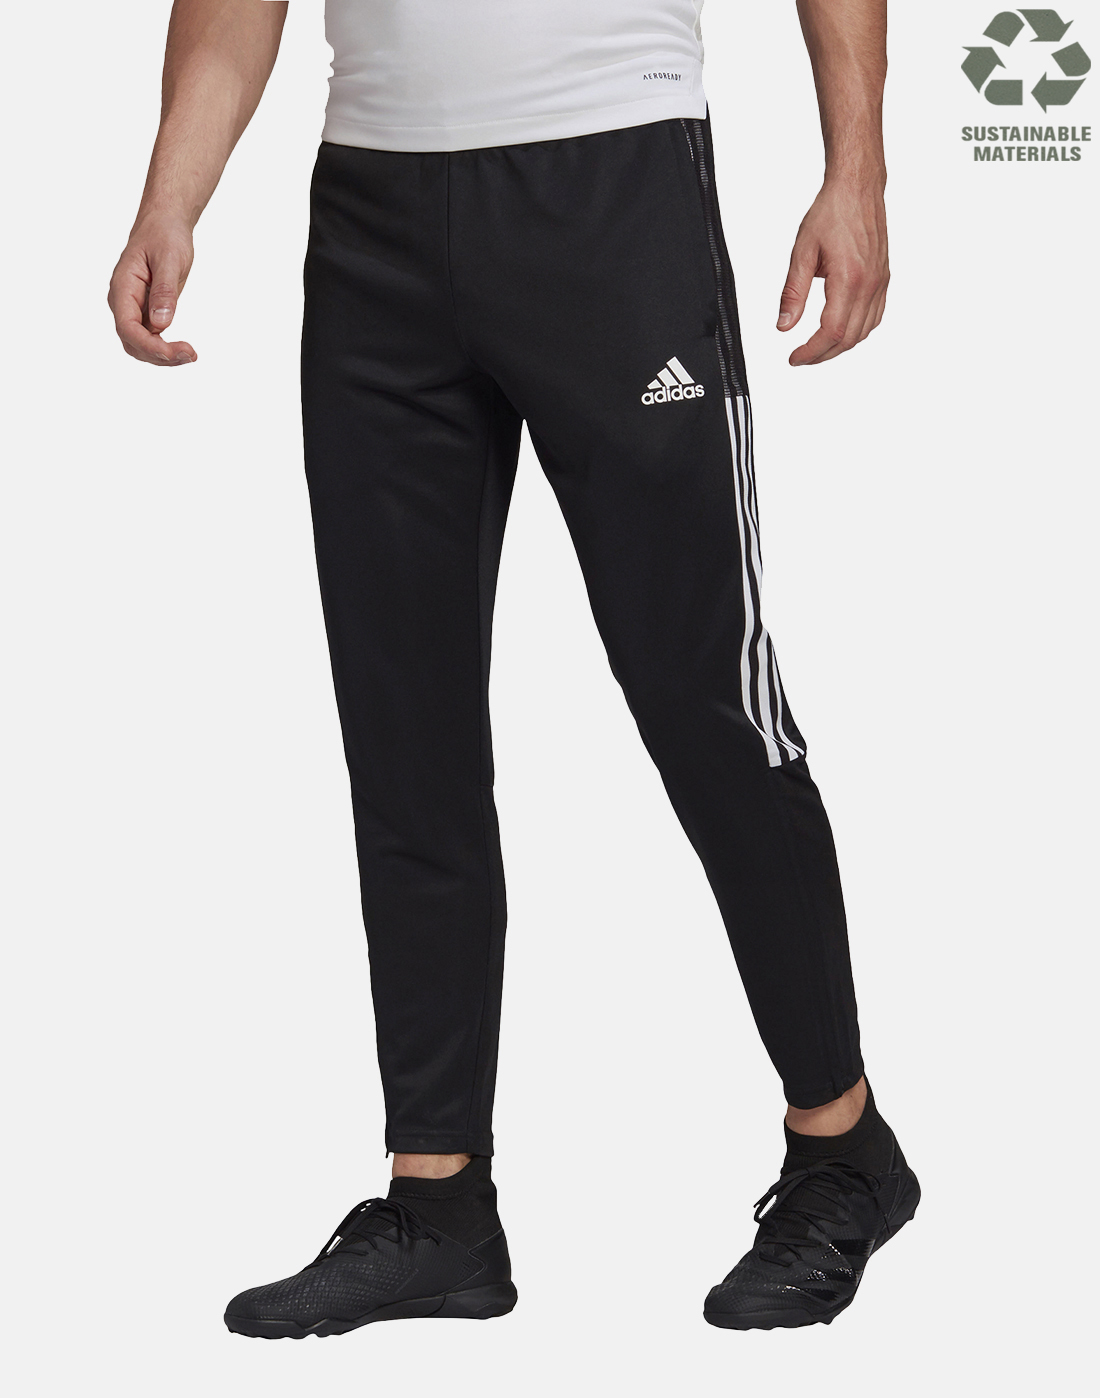 New Adidas Tiro 19 Climacool Men's Athletic Workout Training Slim Fit Pants  - Walmart.com